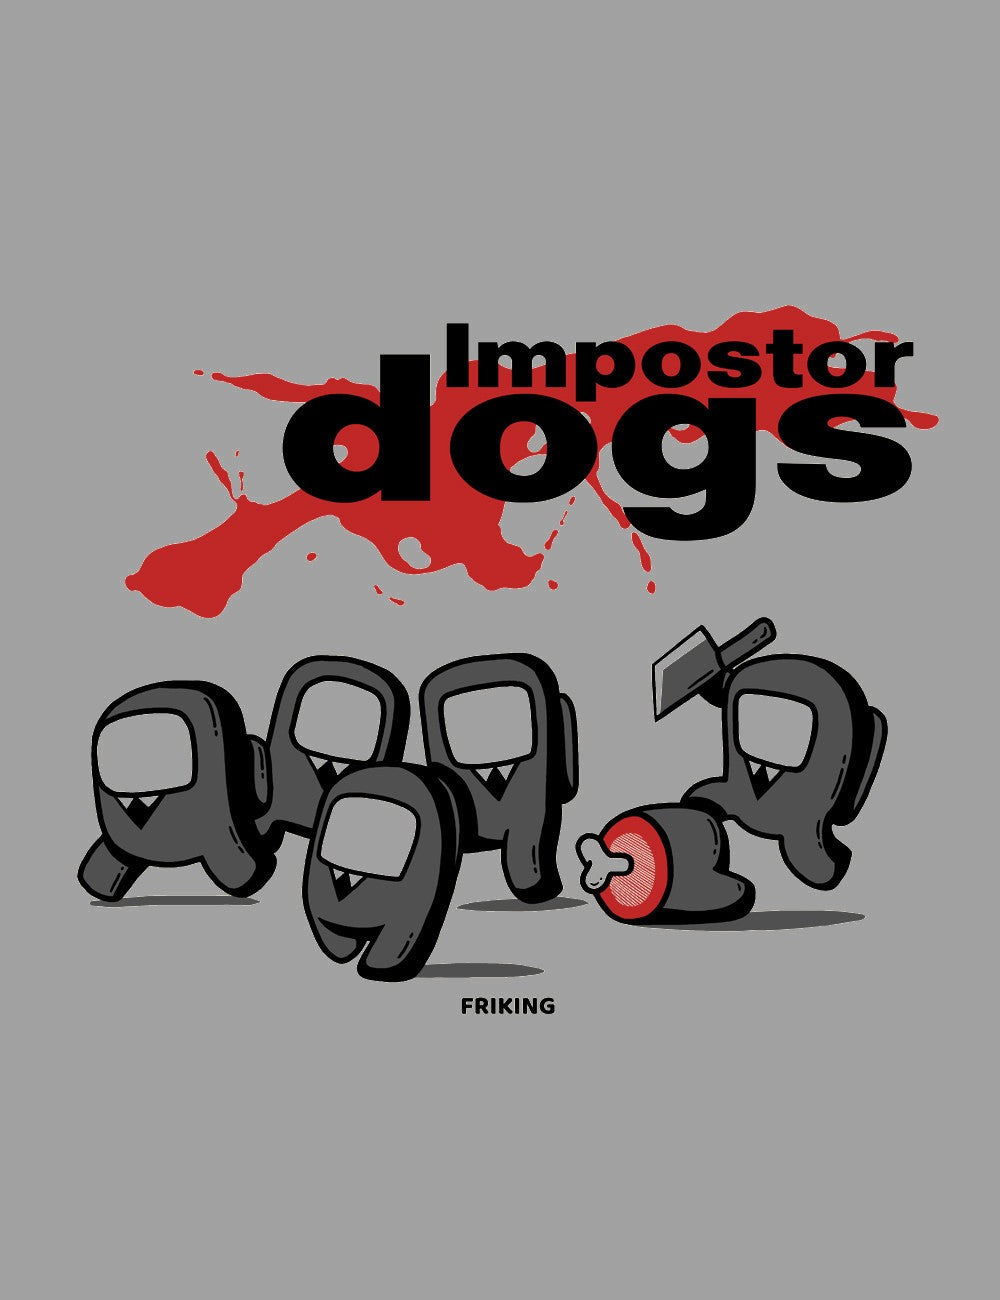  Impostor dogs 